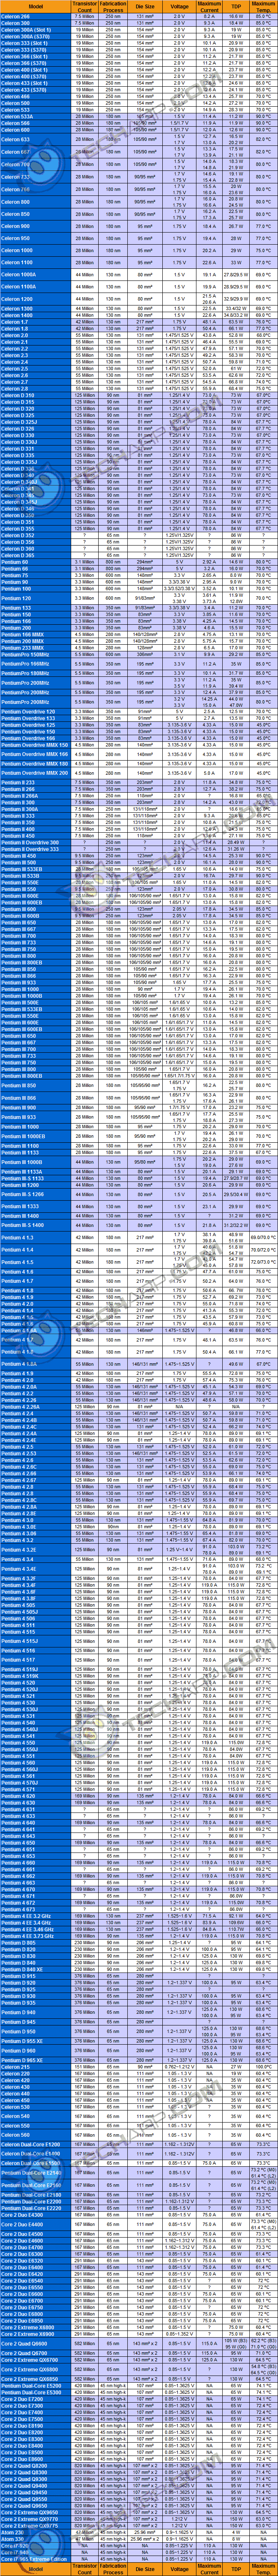 CPU Power (Intel)